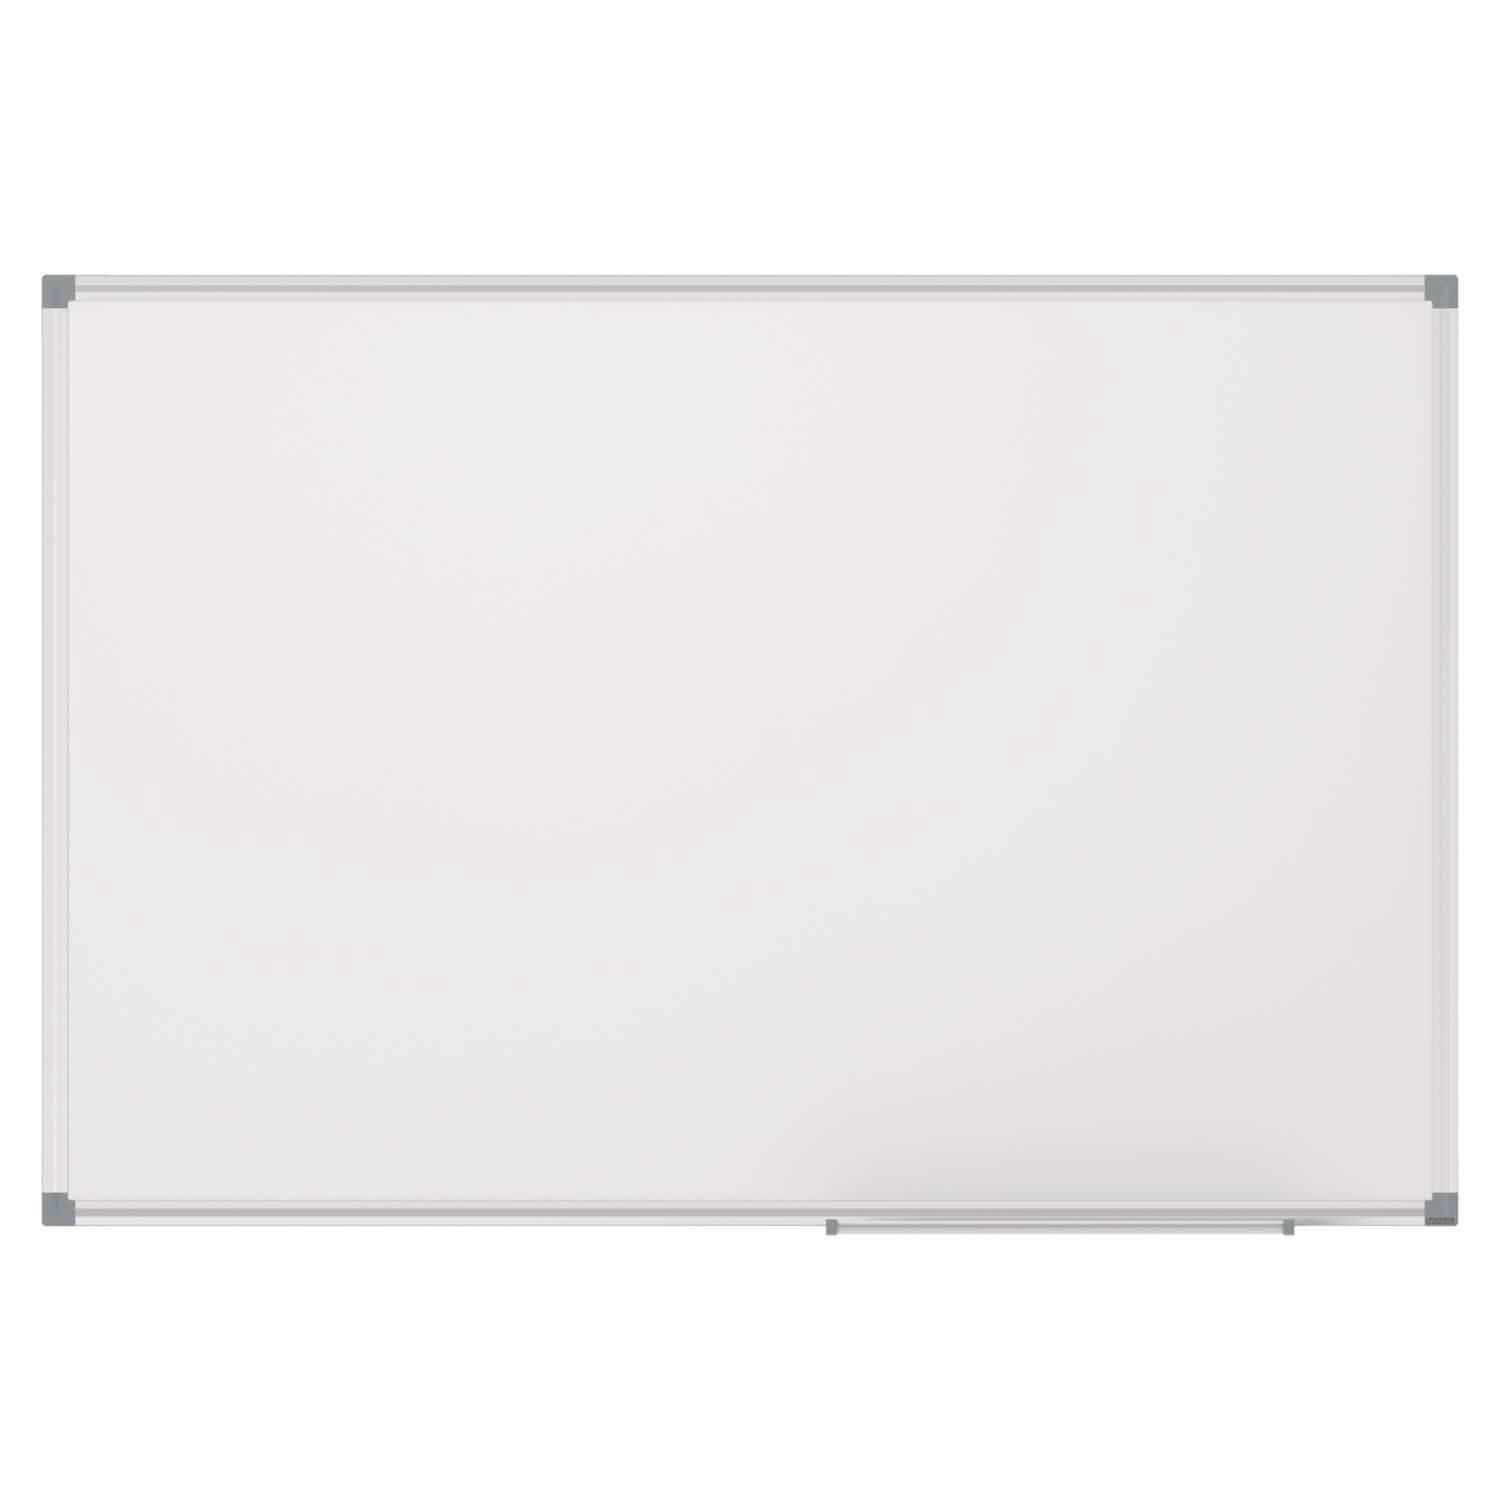 Tableau blanc MAULstandard , émaillé, 90 x 120 cm